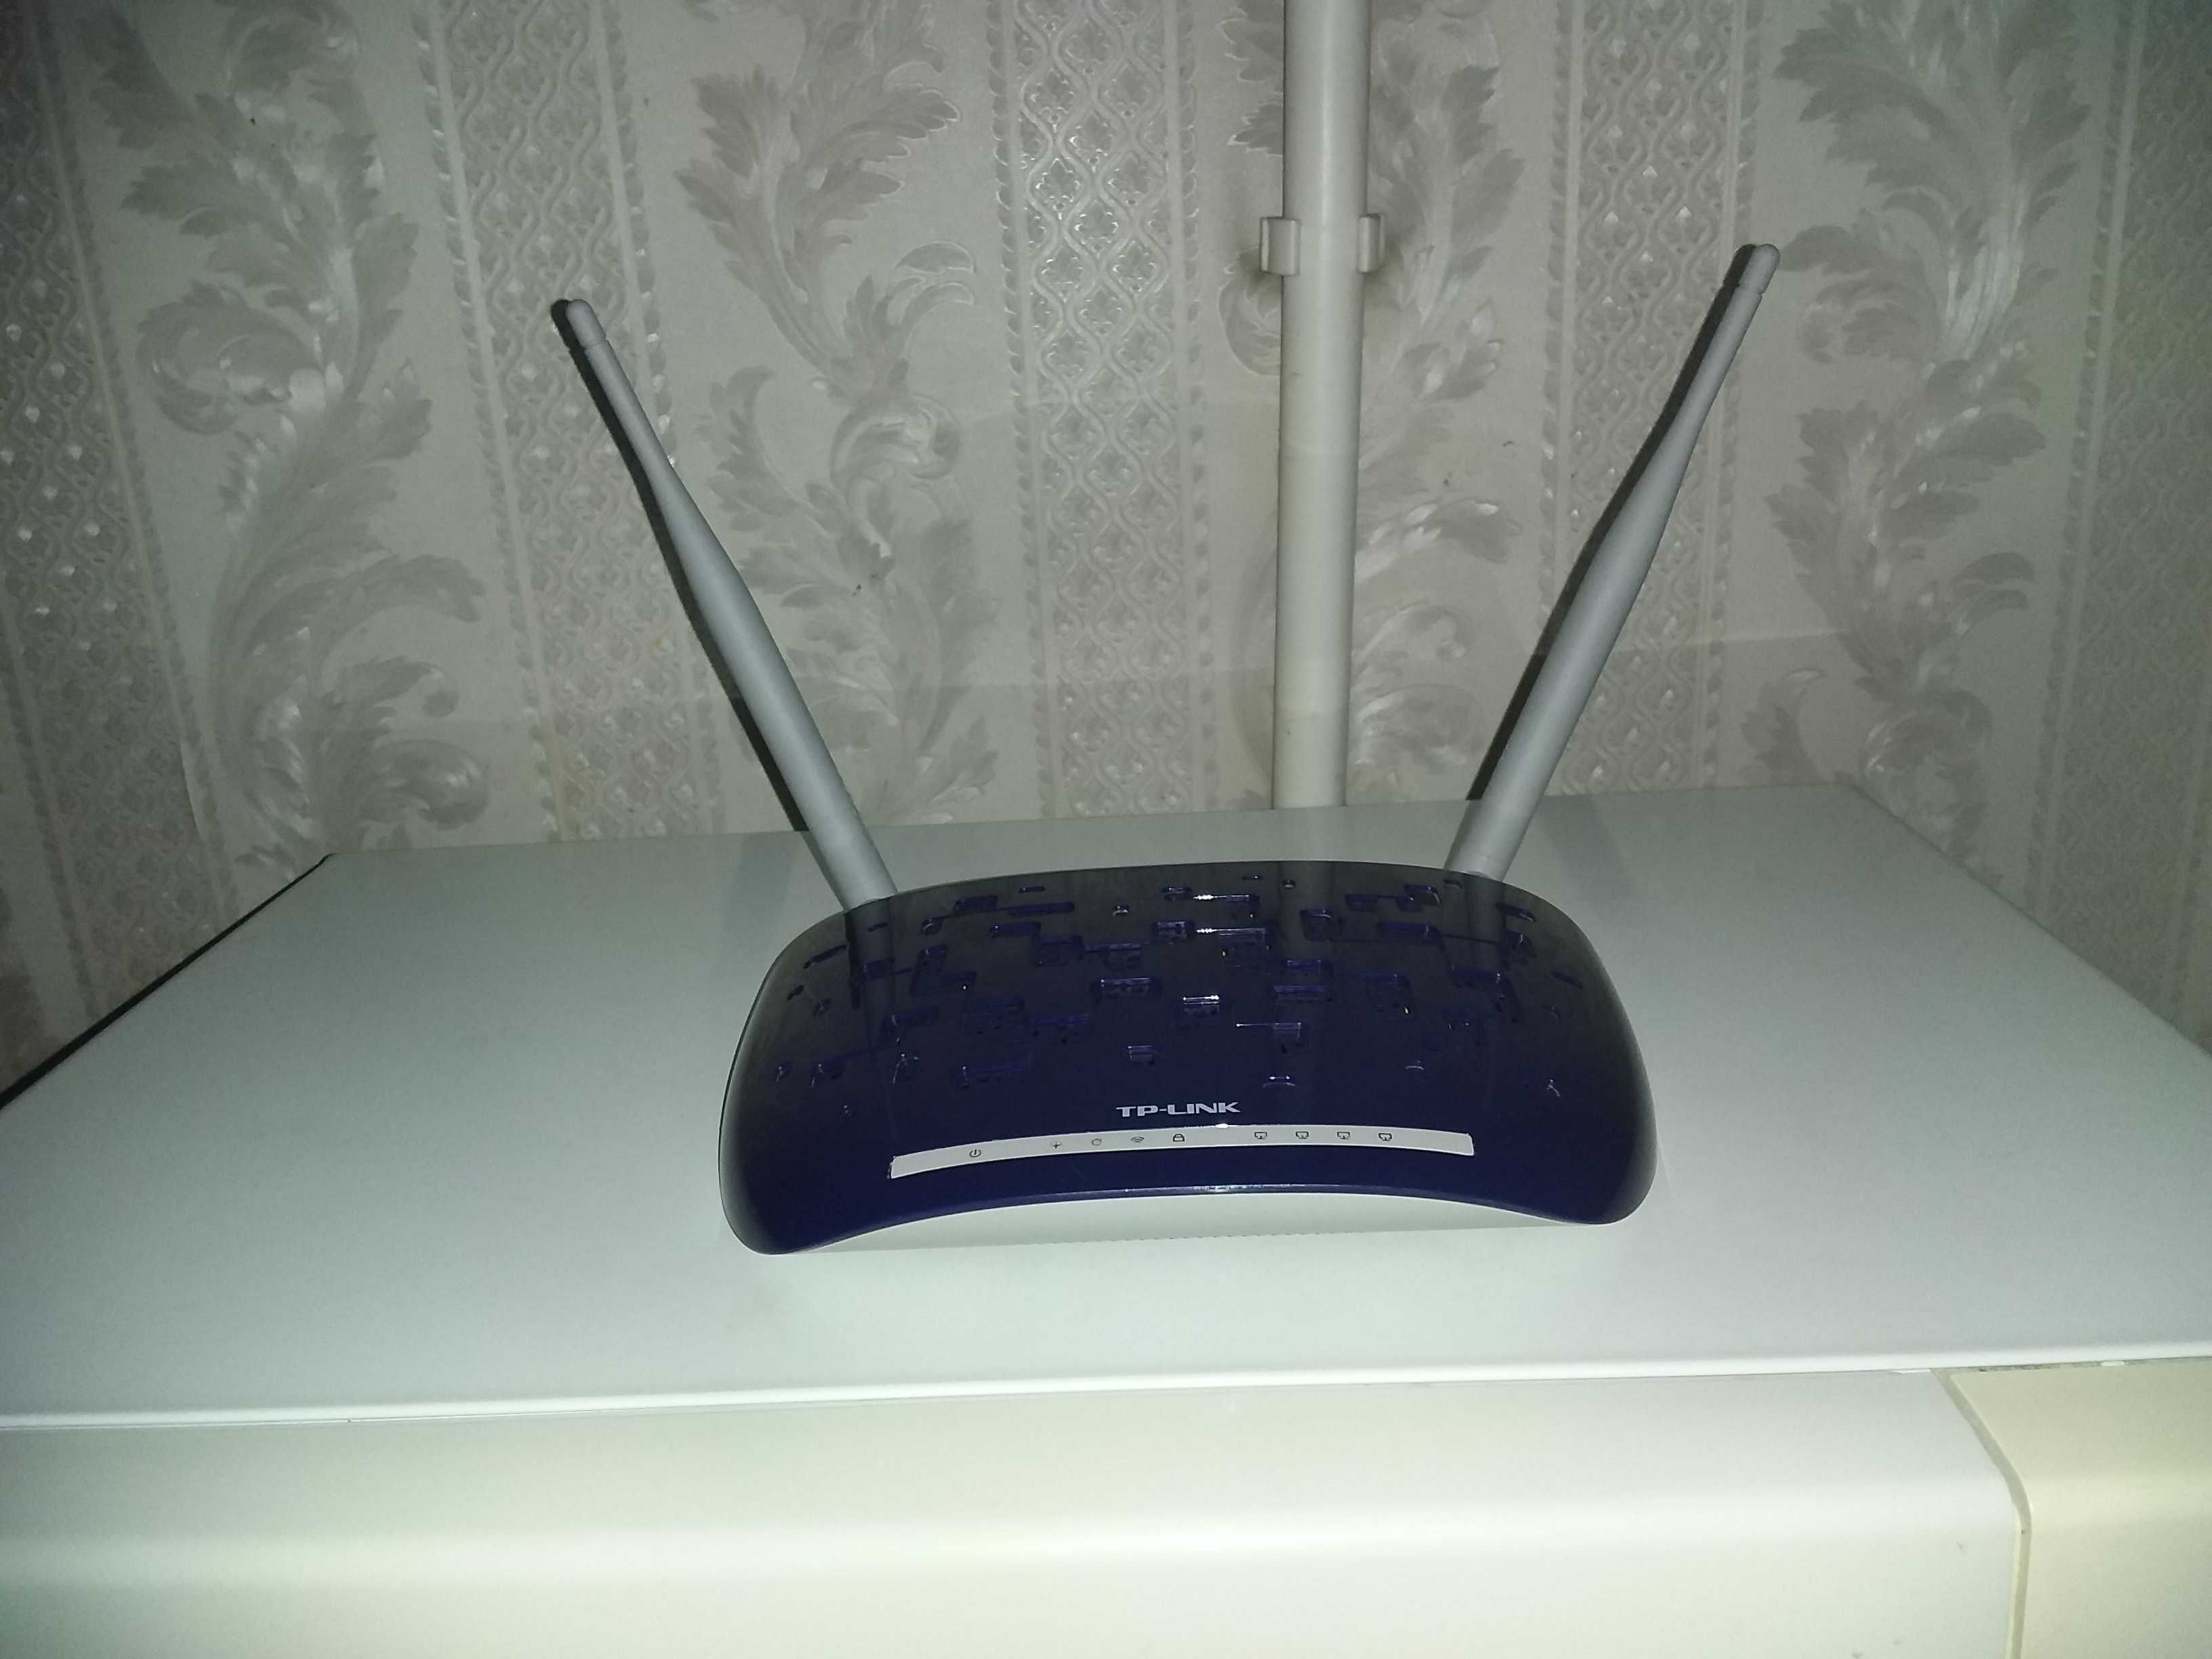 Универсальный Вай-Фай Wi-Fi  роутер TP-LINK TD-W8960N ADSL2+ ОПТИКА